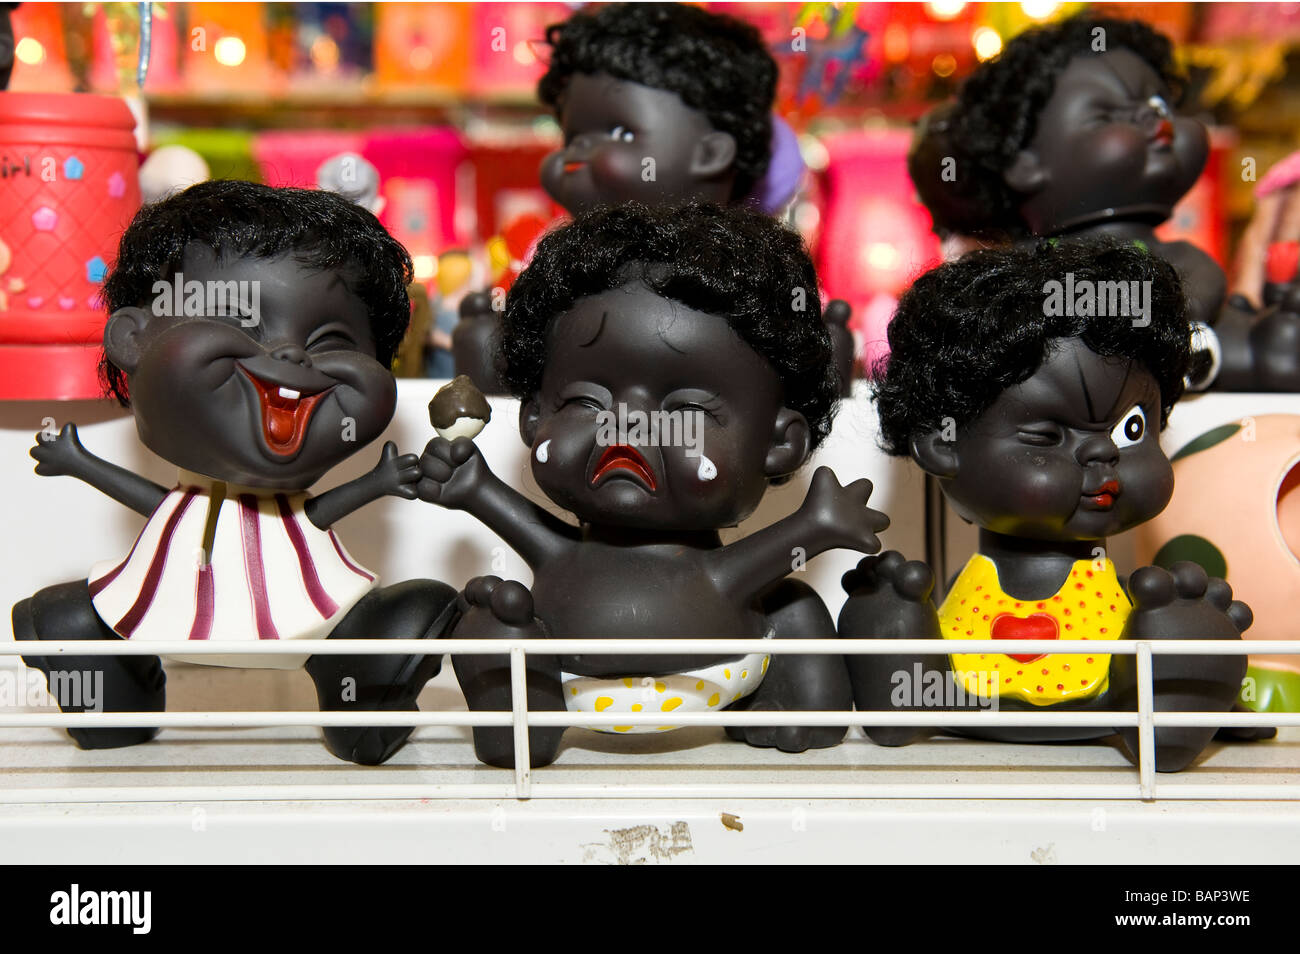 Novelty dolls on a stall in Chatuchak Weekend Market, Bangkok, Thailand. Stock Photo